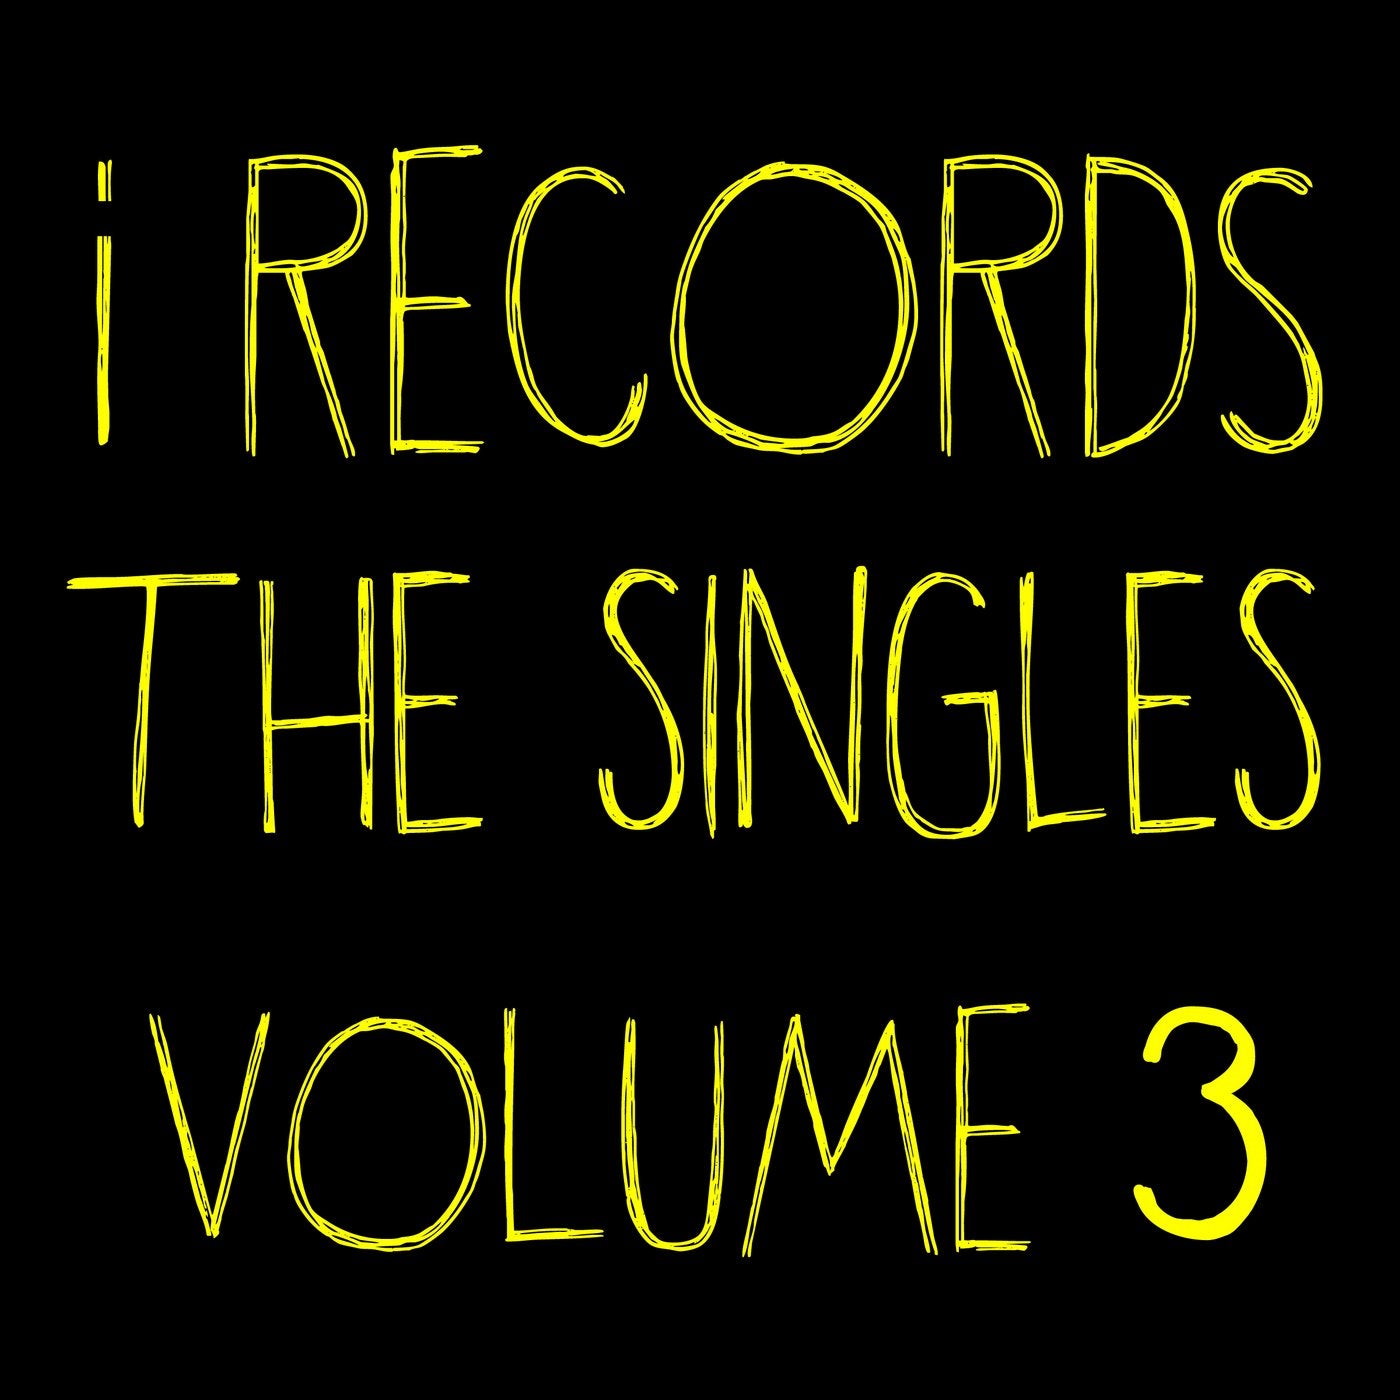 I Records The Singles Volume 3